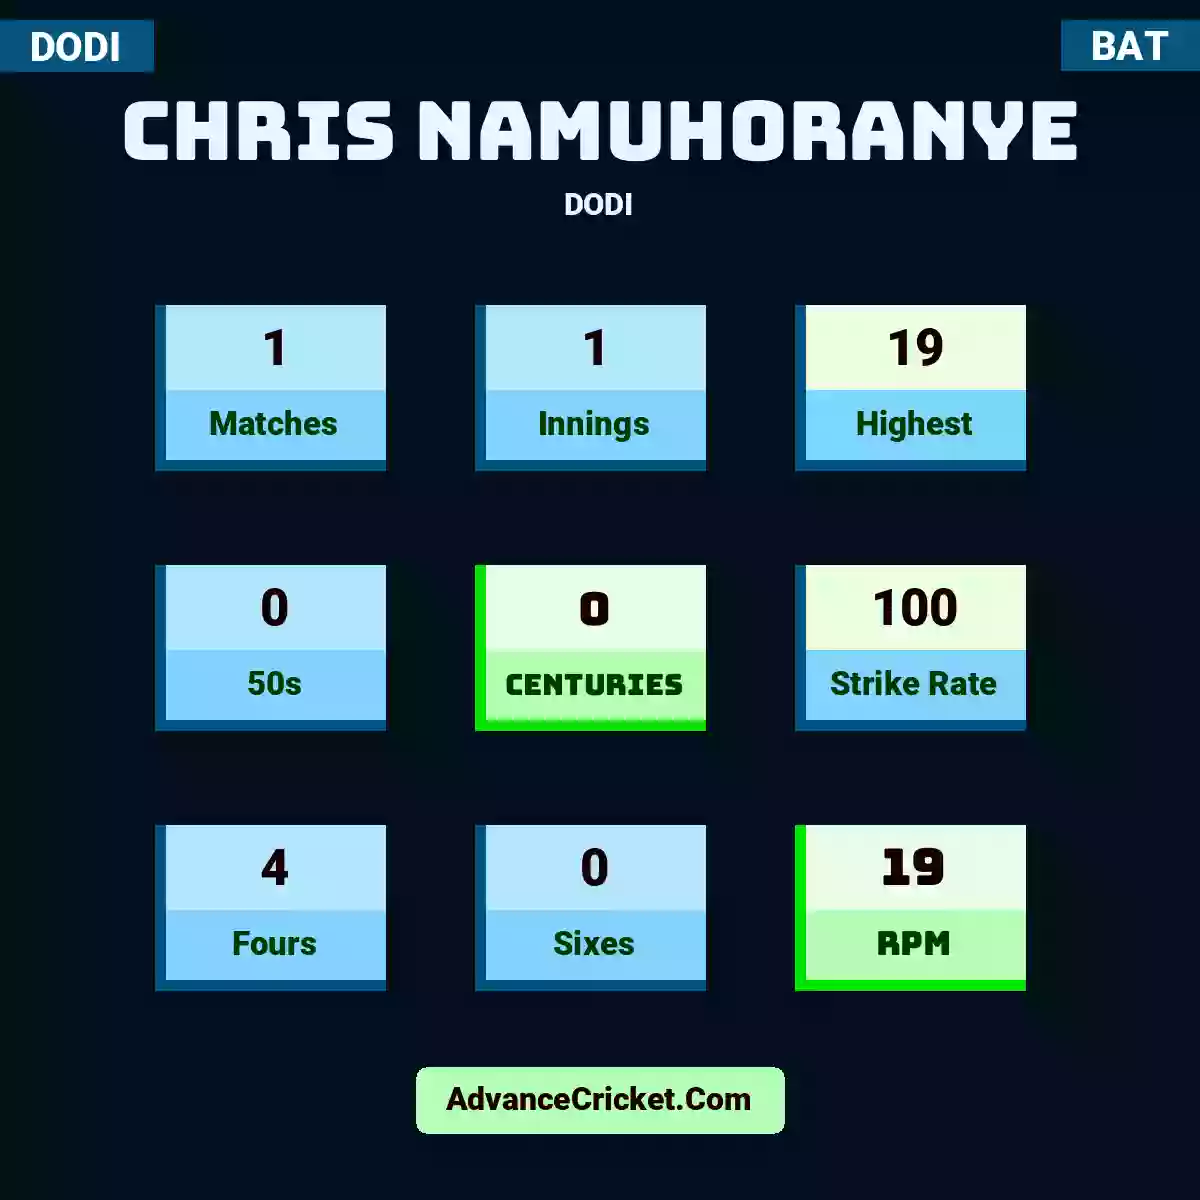 Chris Namuhoranye DODI , Chris Namuhoranye played 1 matches, scored 19 runs as highest, 0 half-centuries, and 0 centuries, with a strike rate of 100. C.Namuhoranye hit 4 fours and 0 sixes, with an RPM of 19.